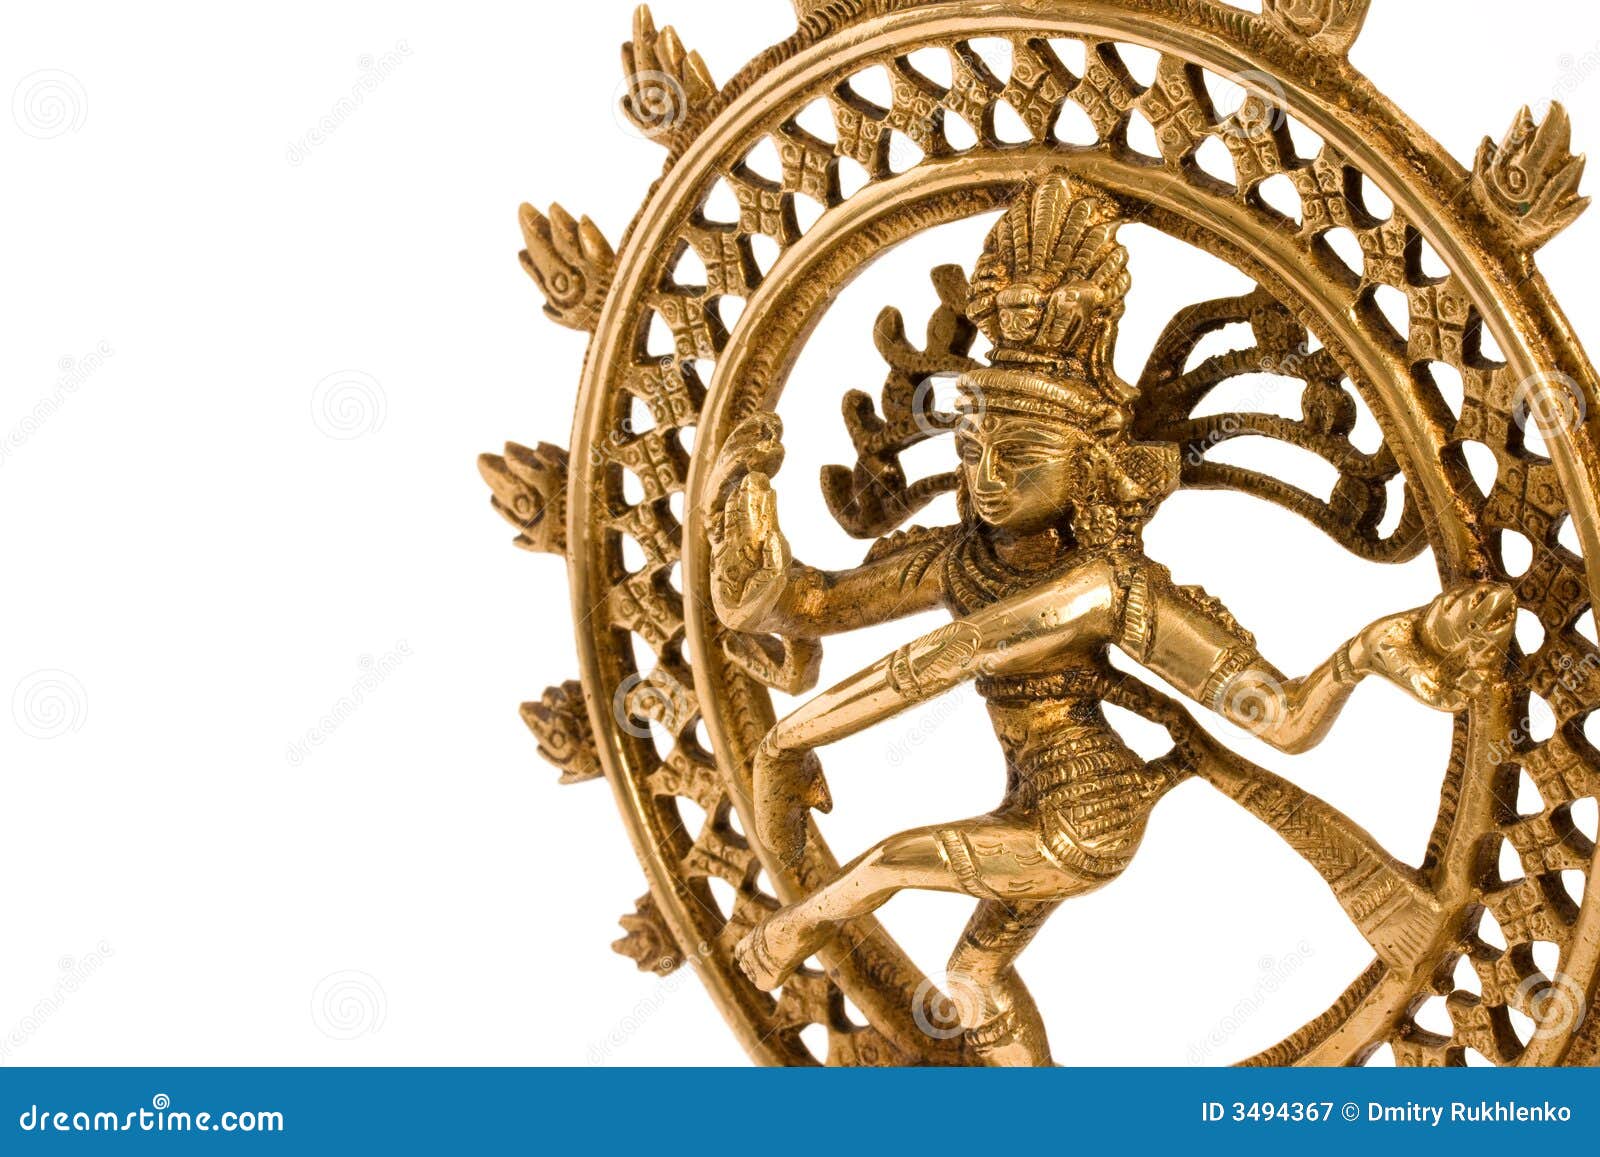 Shiva Nataraja - Lord of Dance Stock Image - Image of traditional ...